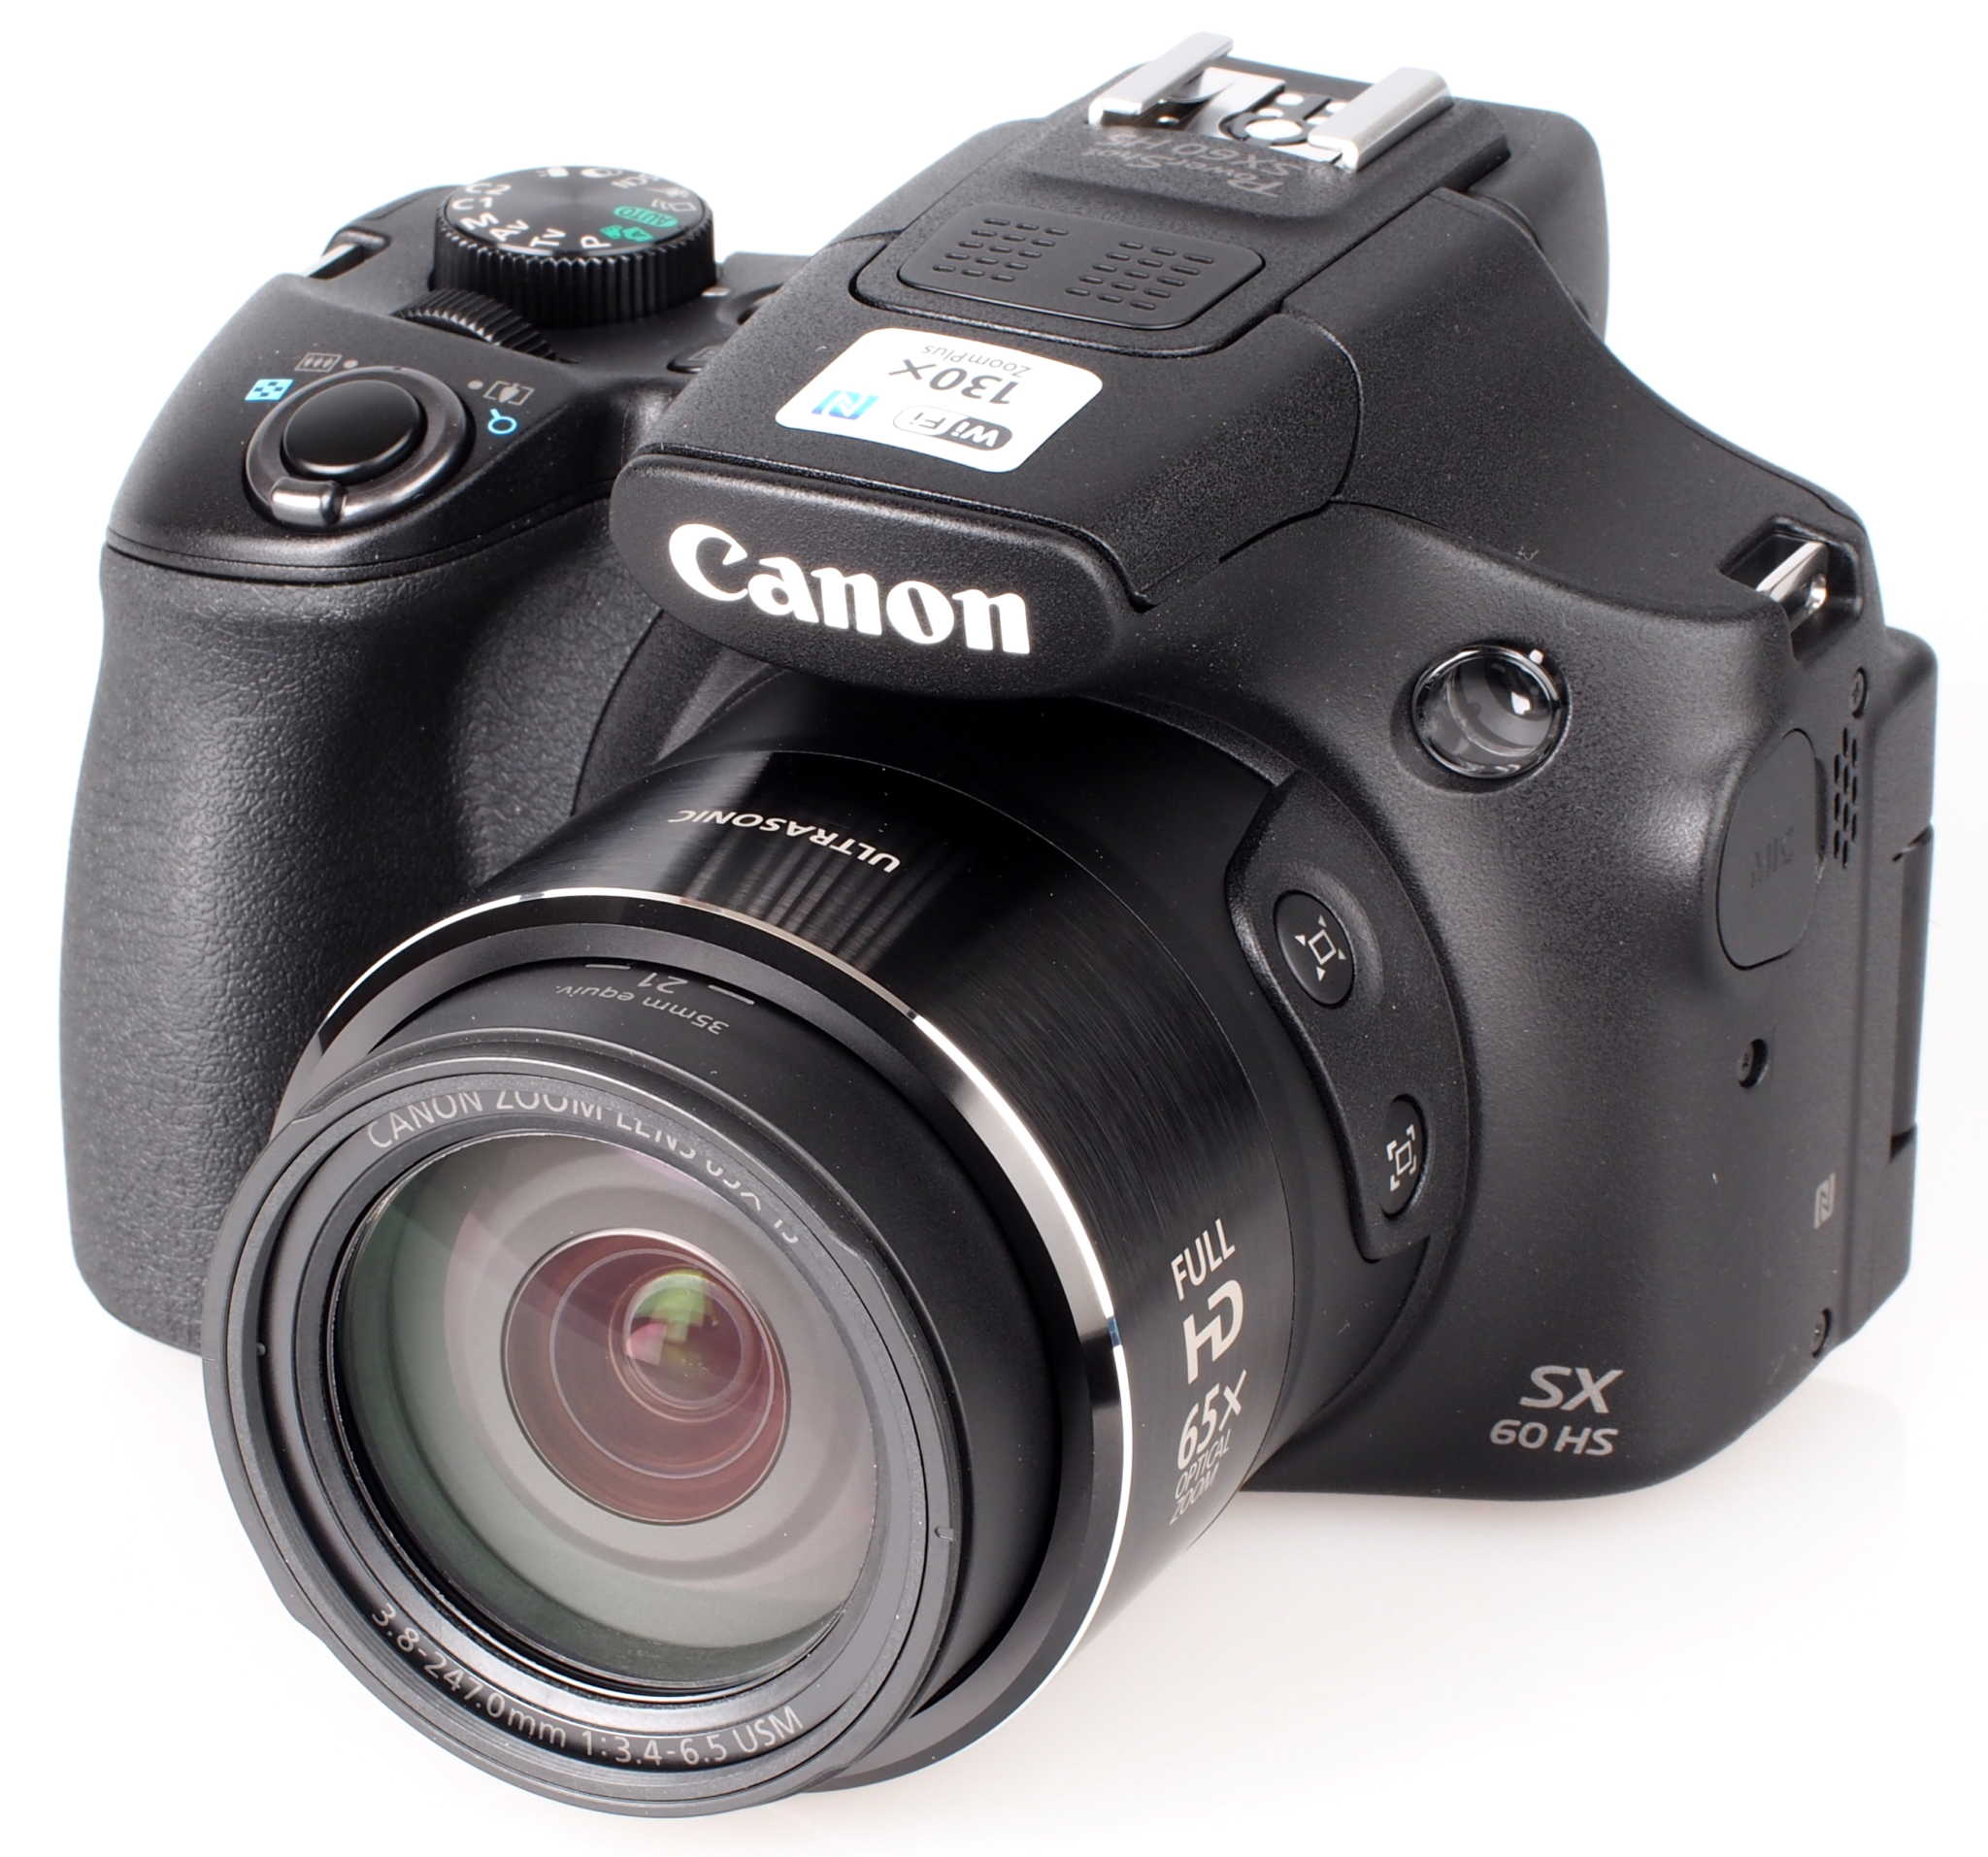 Canon Power Shot SX60 HS : A Rare Premium Camera Featuring Ultra-Zoom Lenses